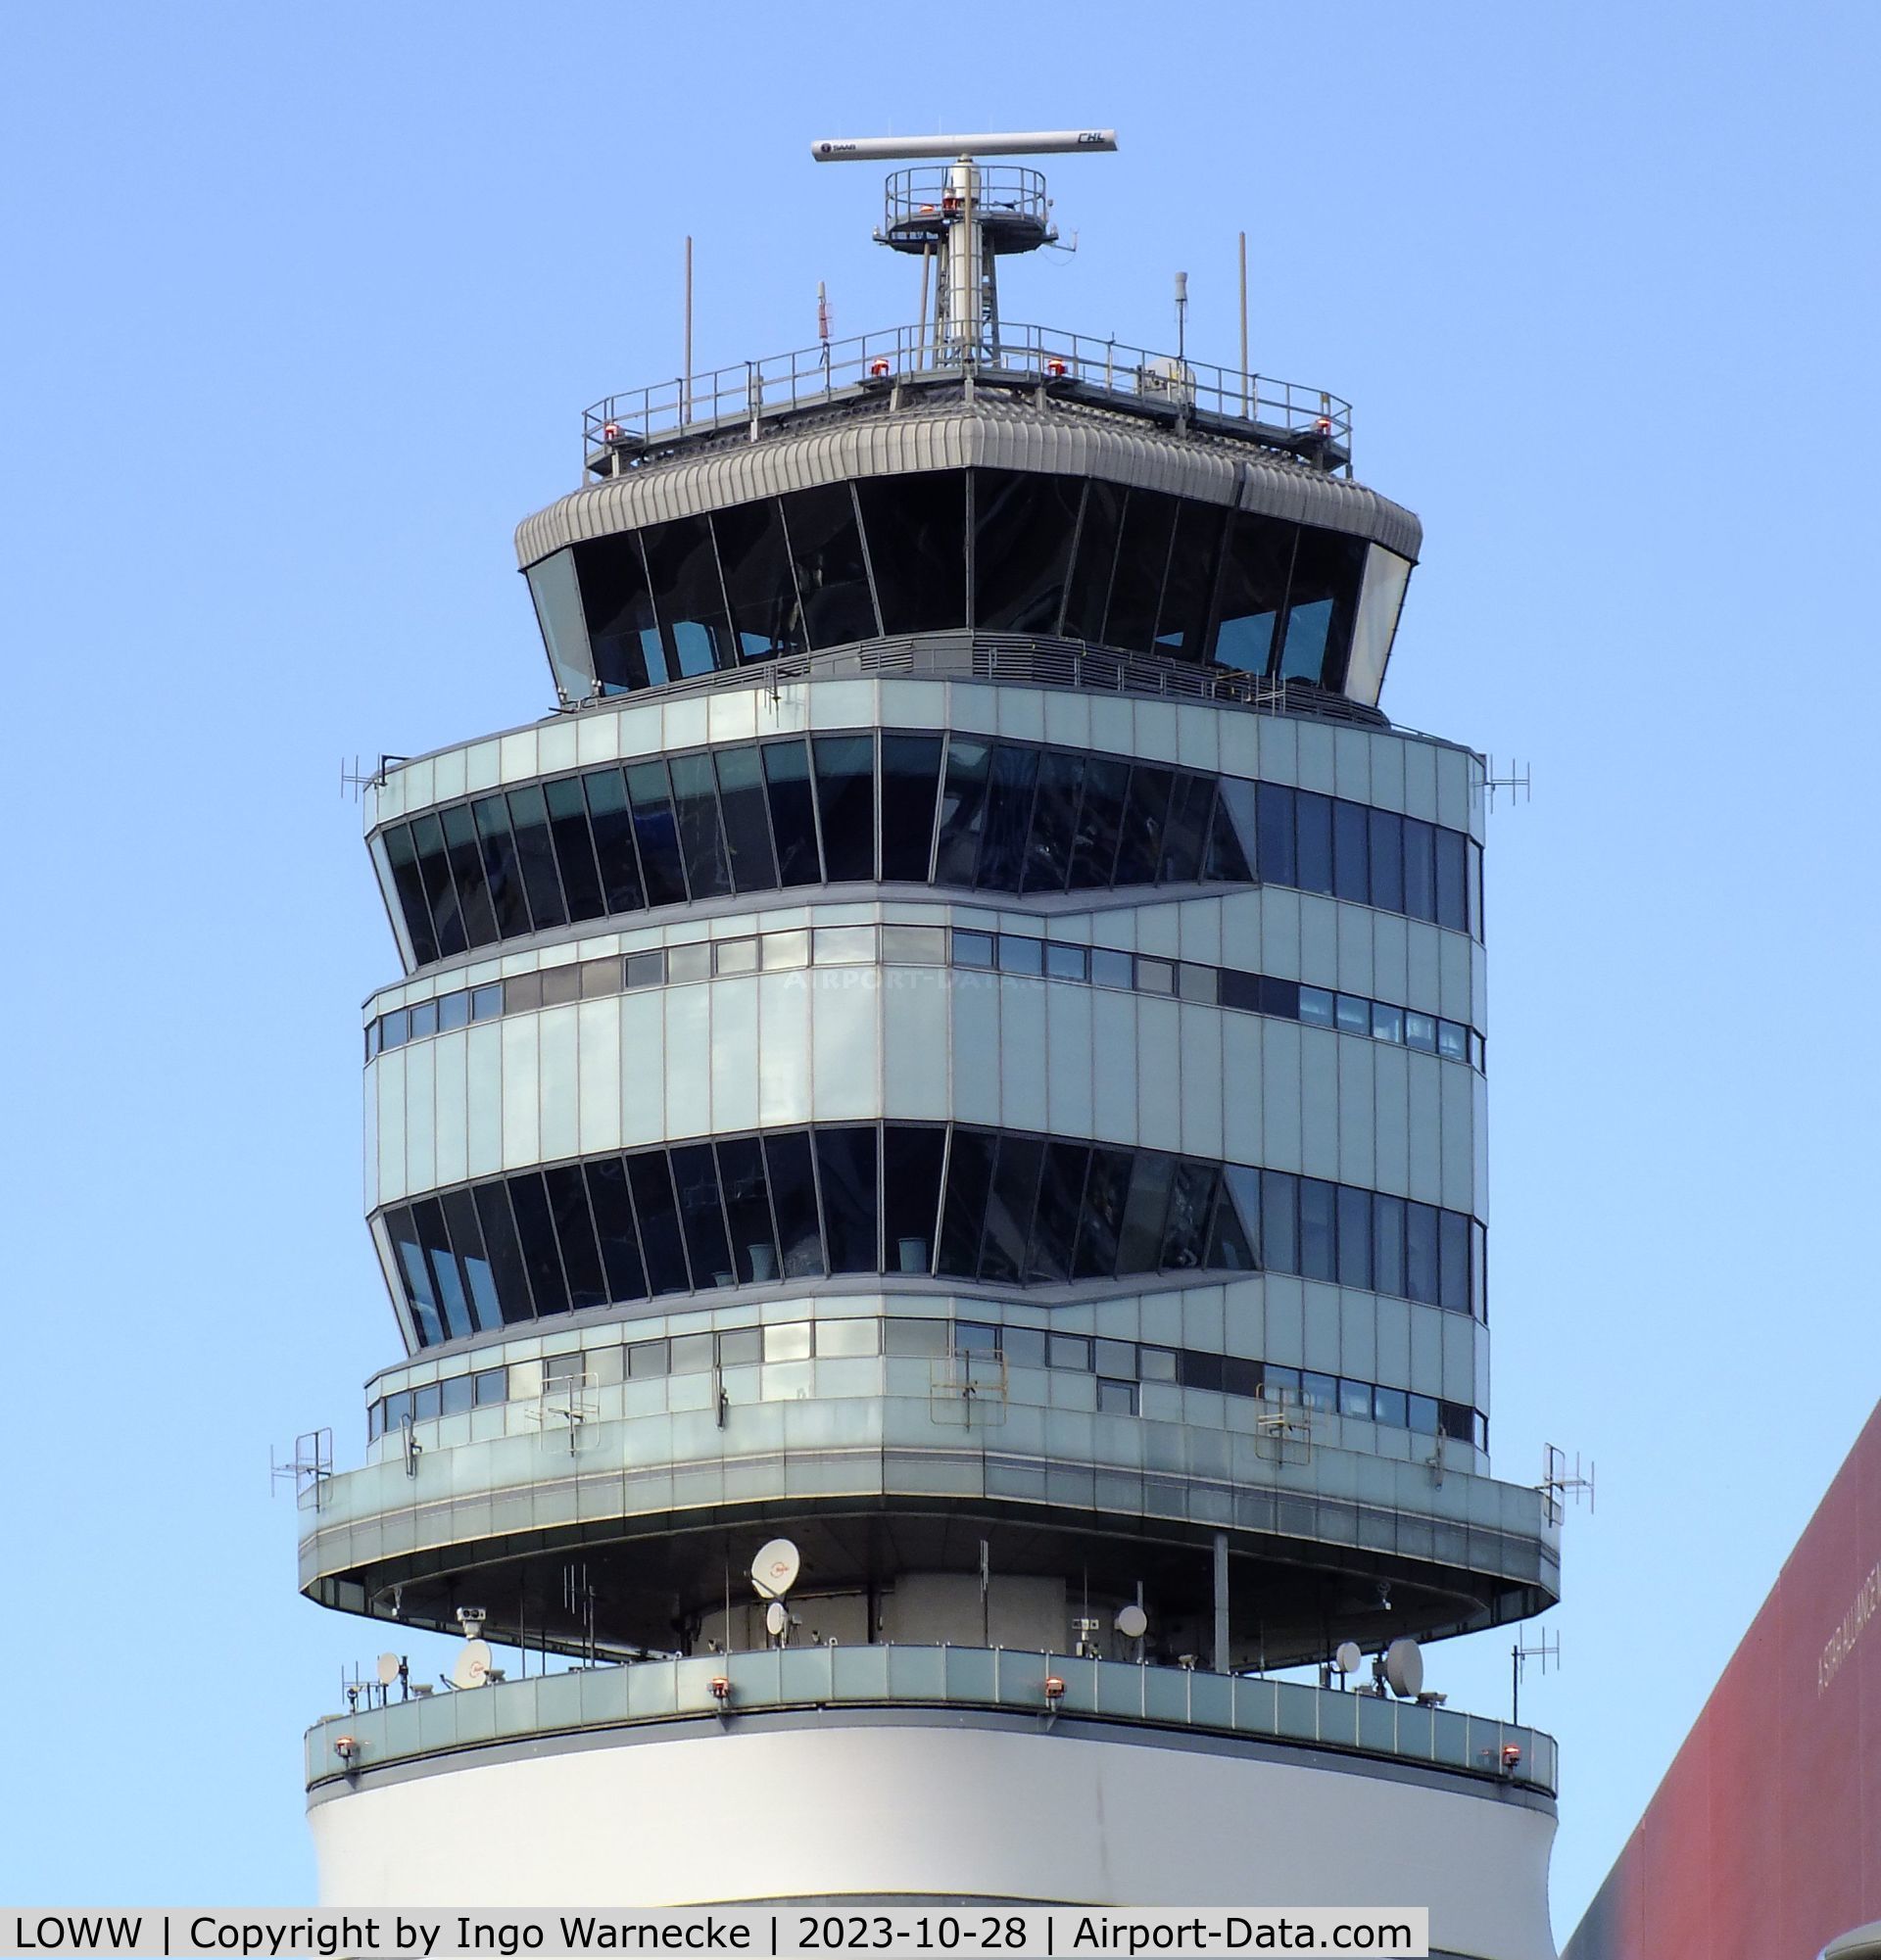 Vienna International Airport, Vienna Austria (LOWW) - closeup of tower at Wien airport